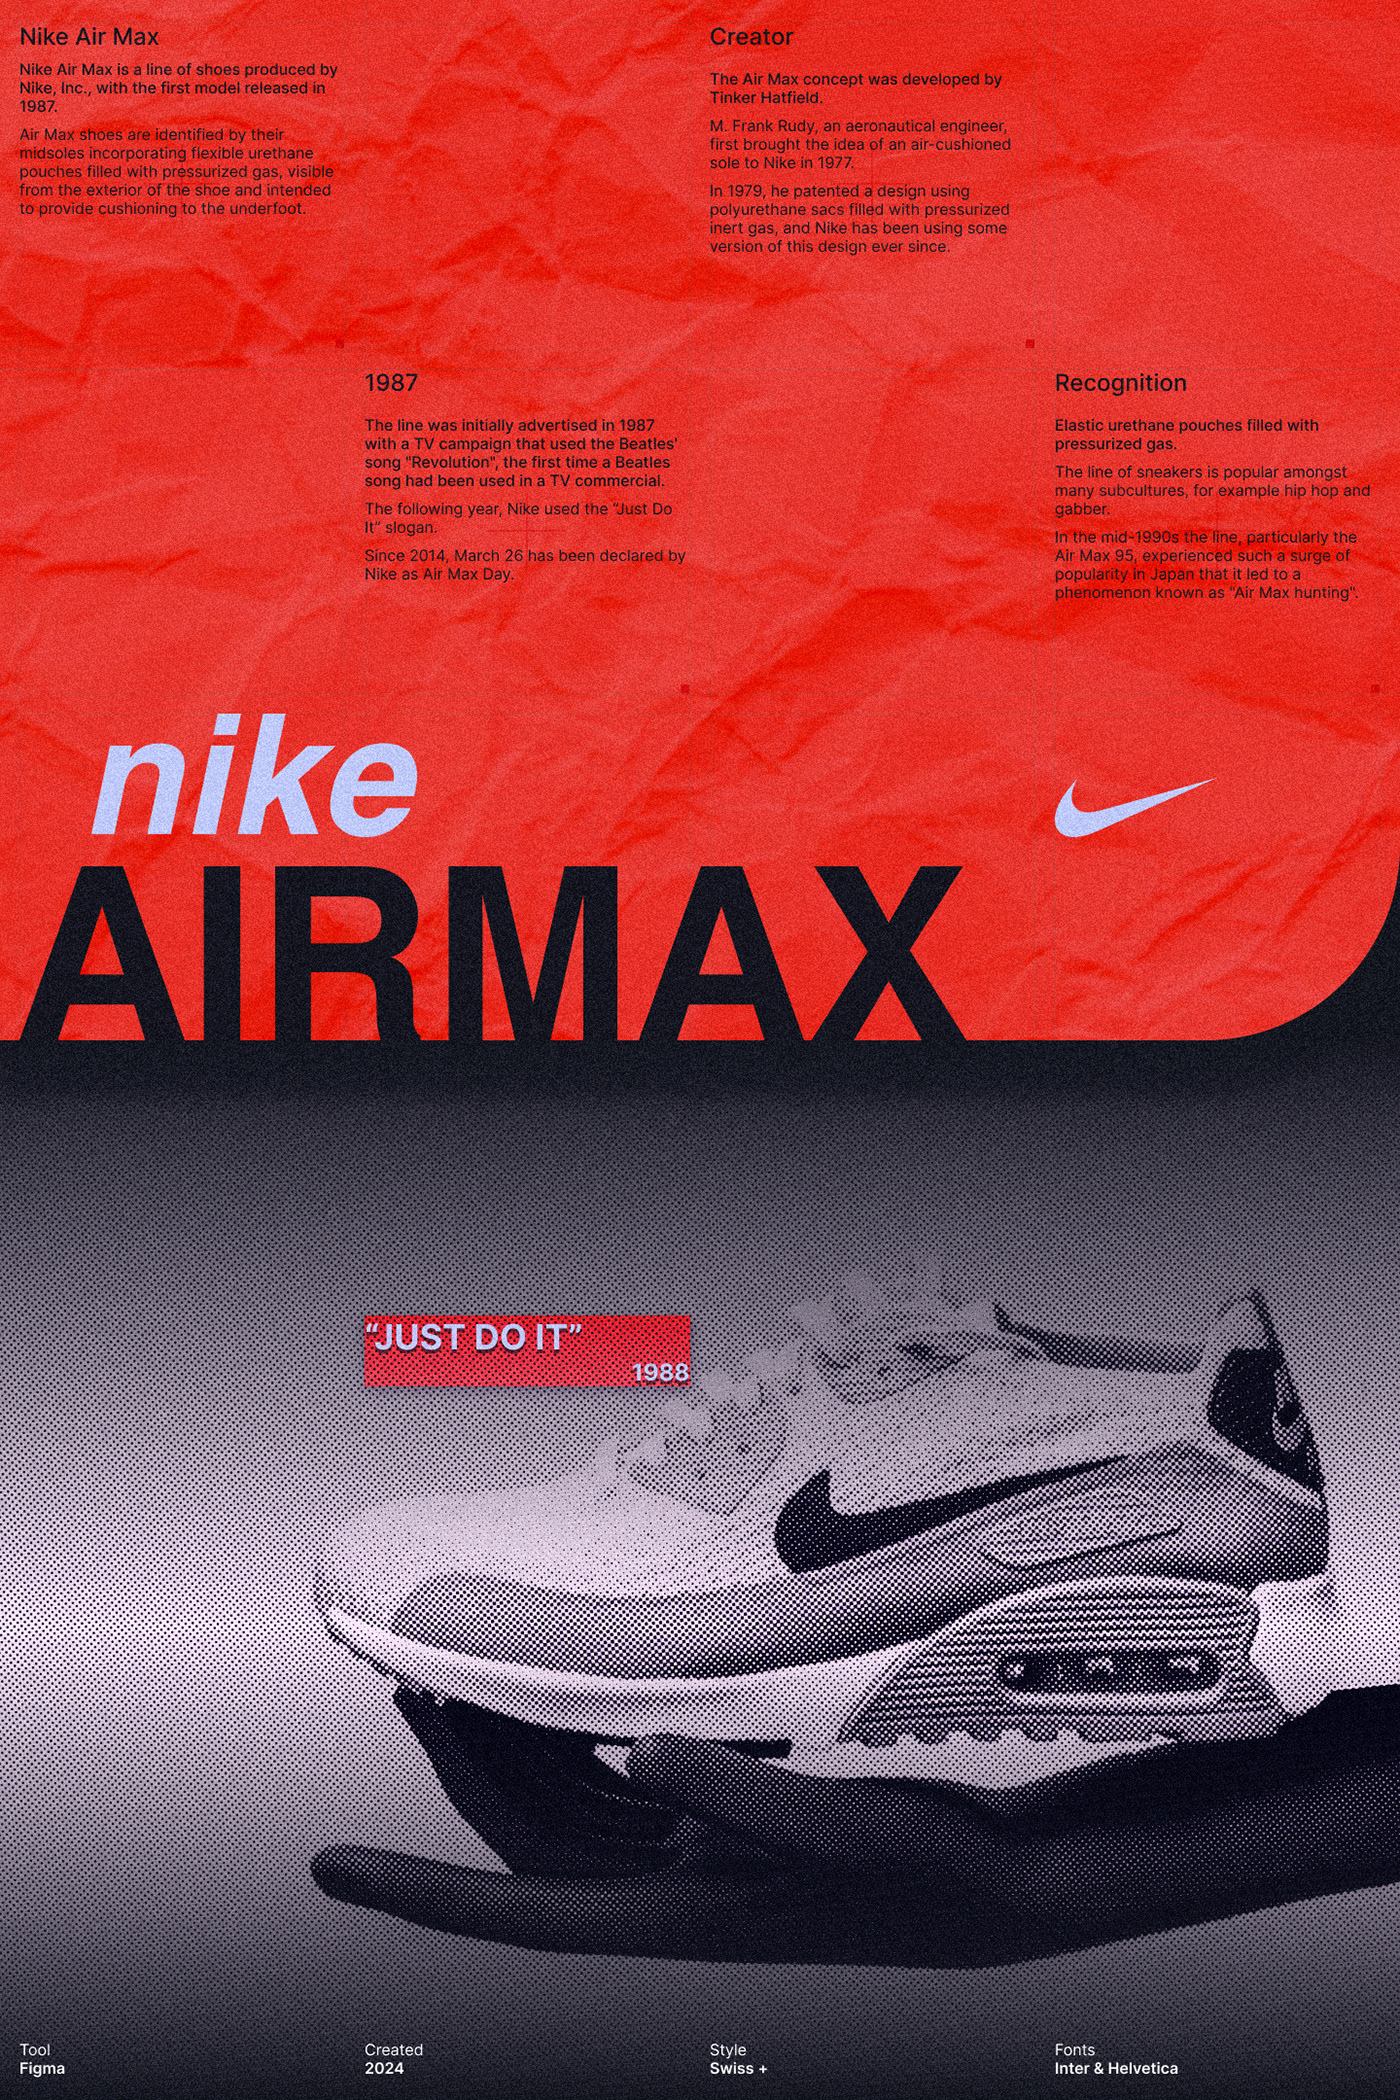 Nike Nike Shoes airmax brand identity swiss swiss design poster art grid branding 